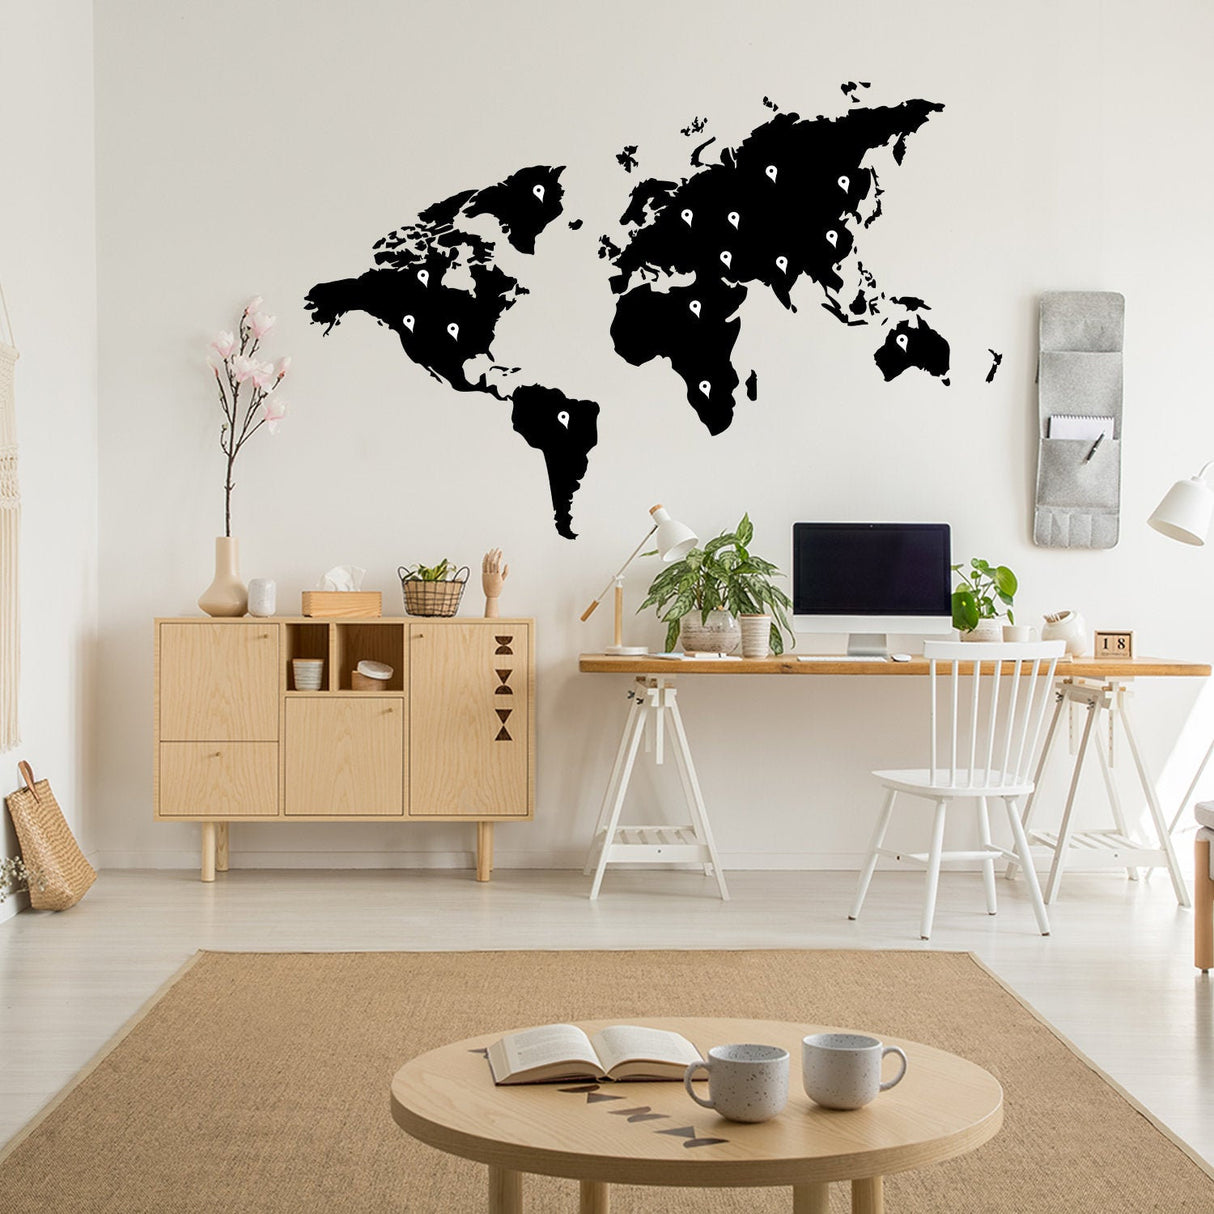 Large World Map Wall Decal Decor Sticker